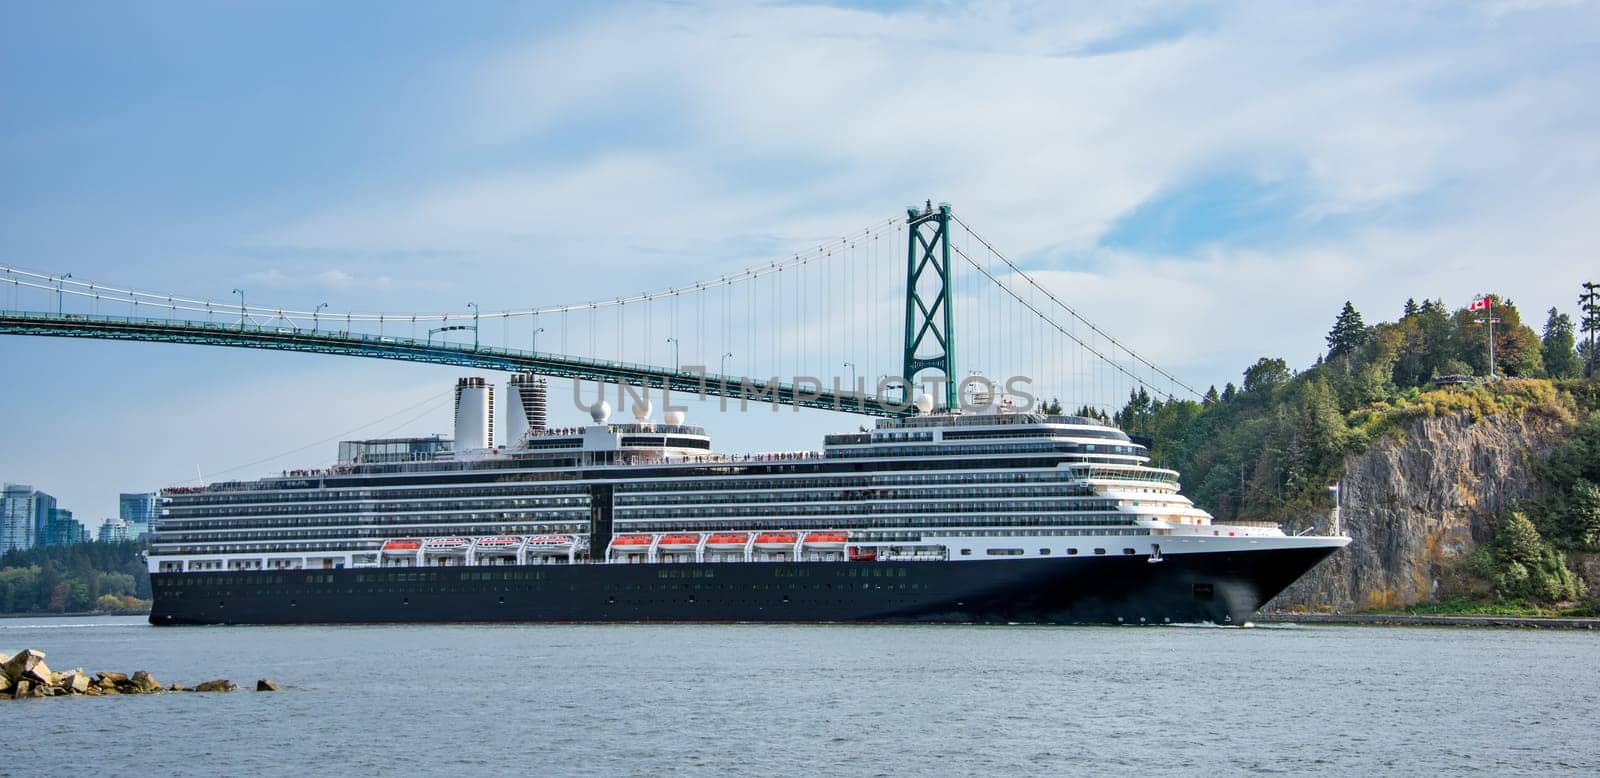 Huge ocean cruise ship passing under famous Lion Gates Bridge. Vancouver, Canada by Imagenet